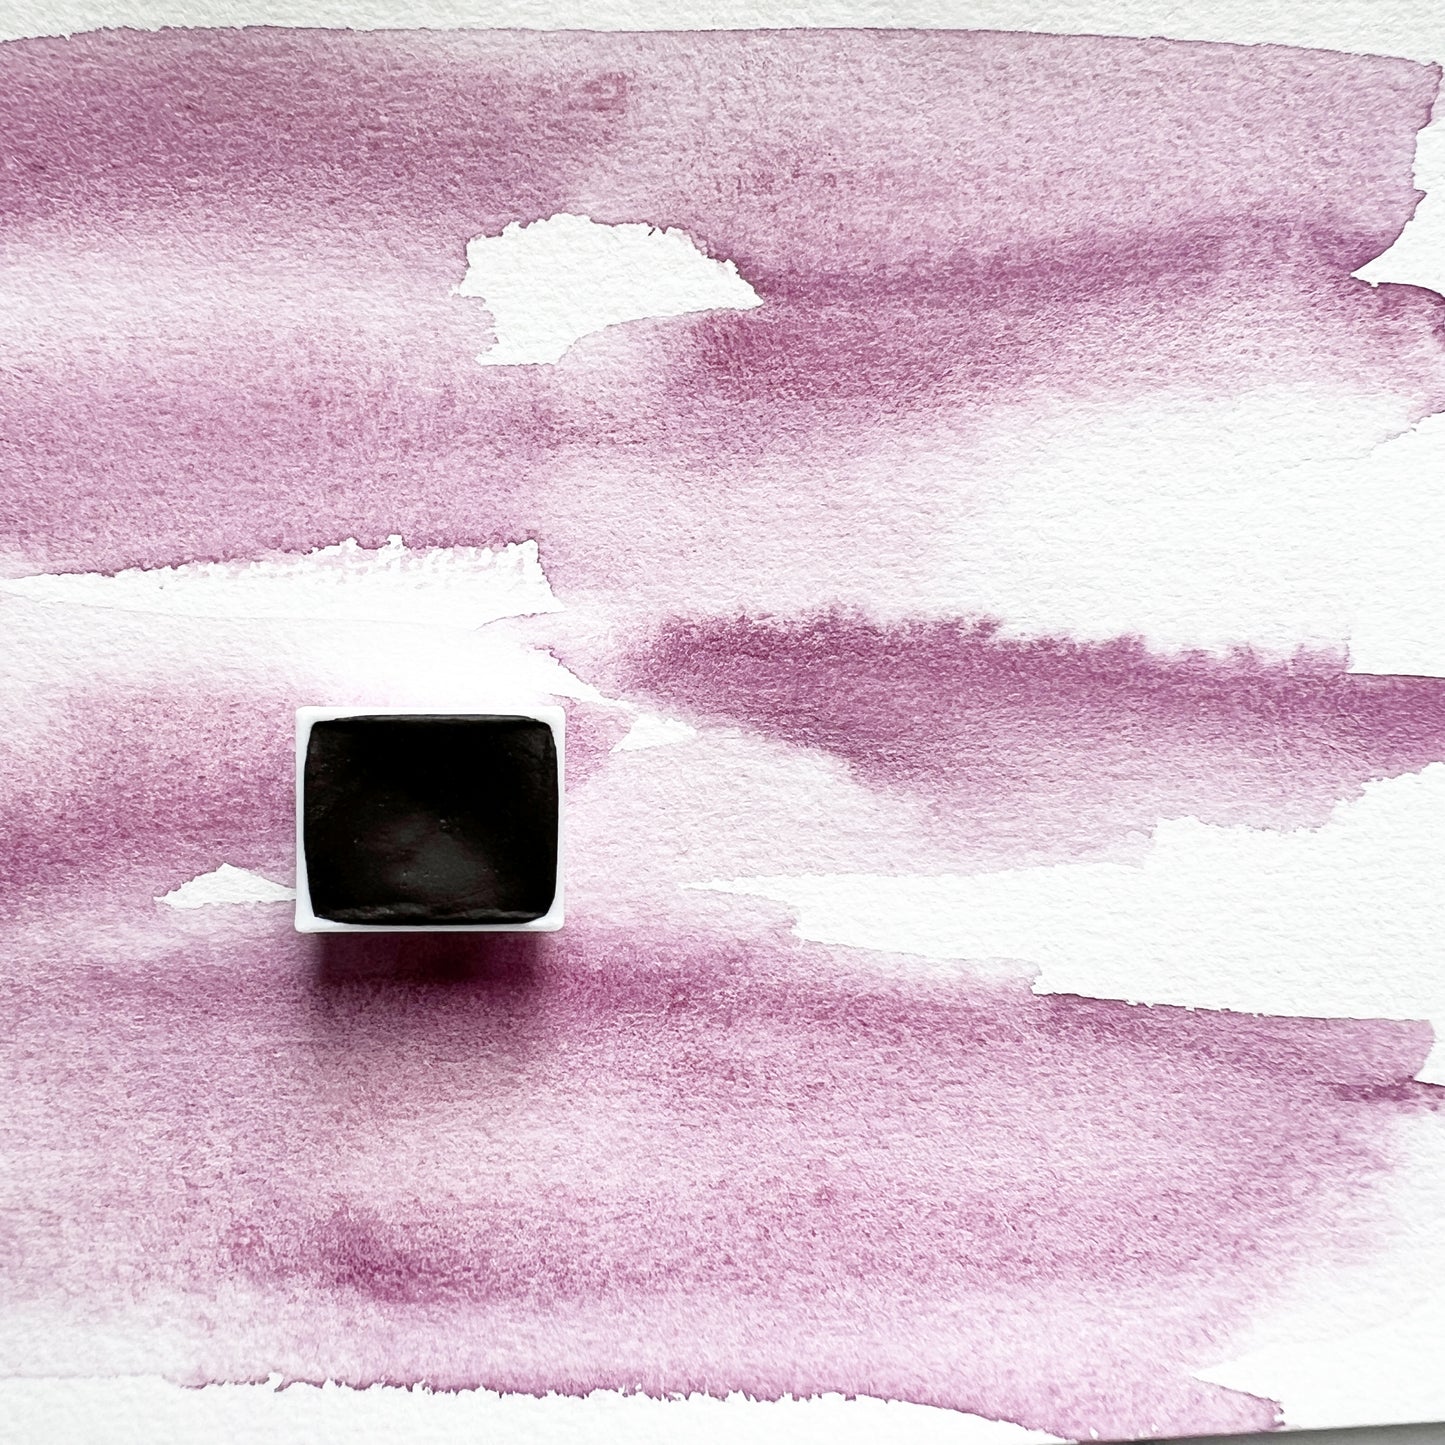 Corinthian Purple. Half pan or bottle cap of handmade watercolor paint